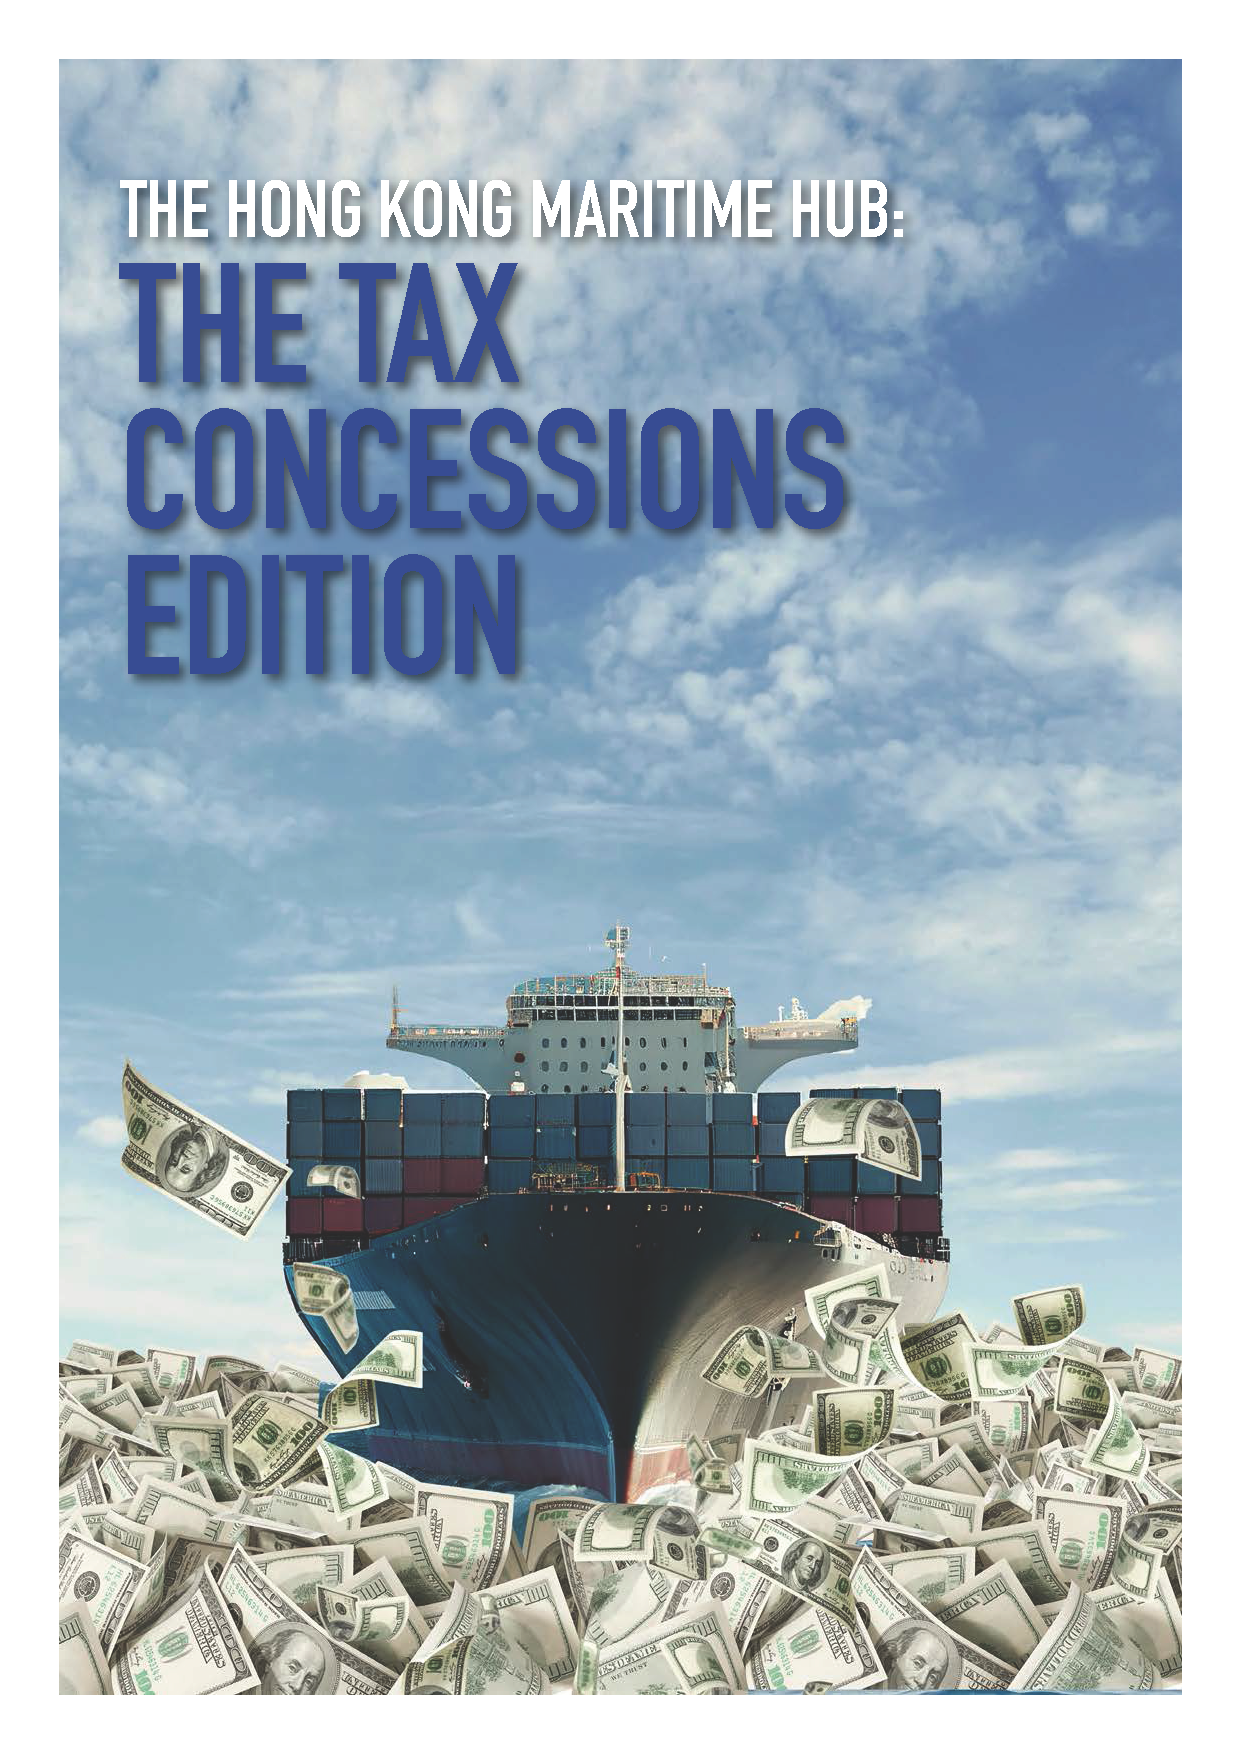 The Hong Kong Maritime Hub: The Tax Concessions Edition